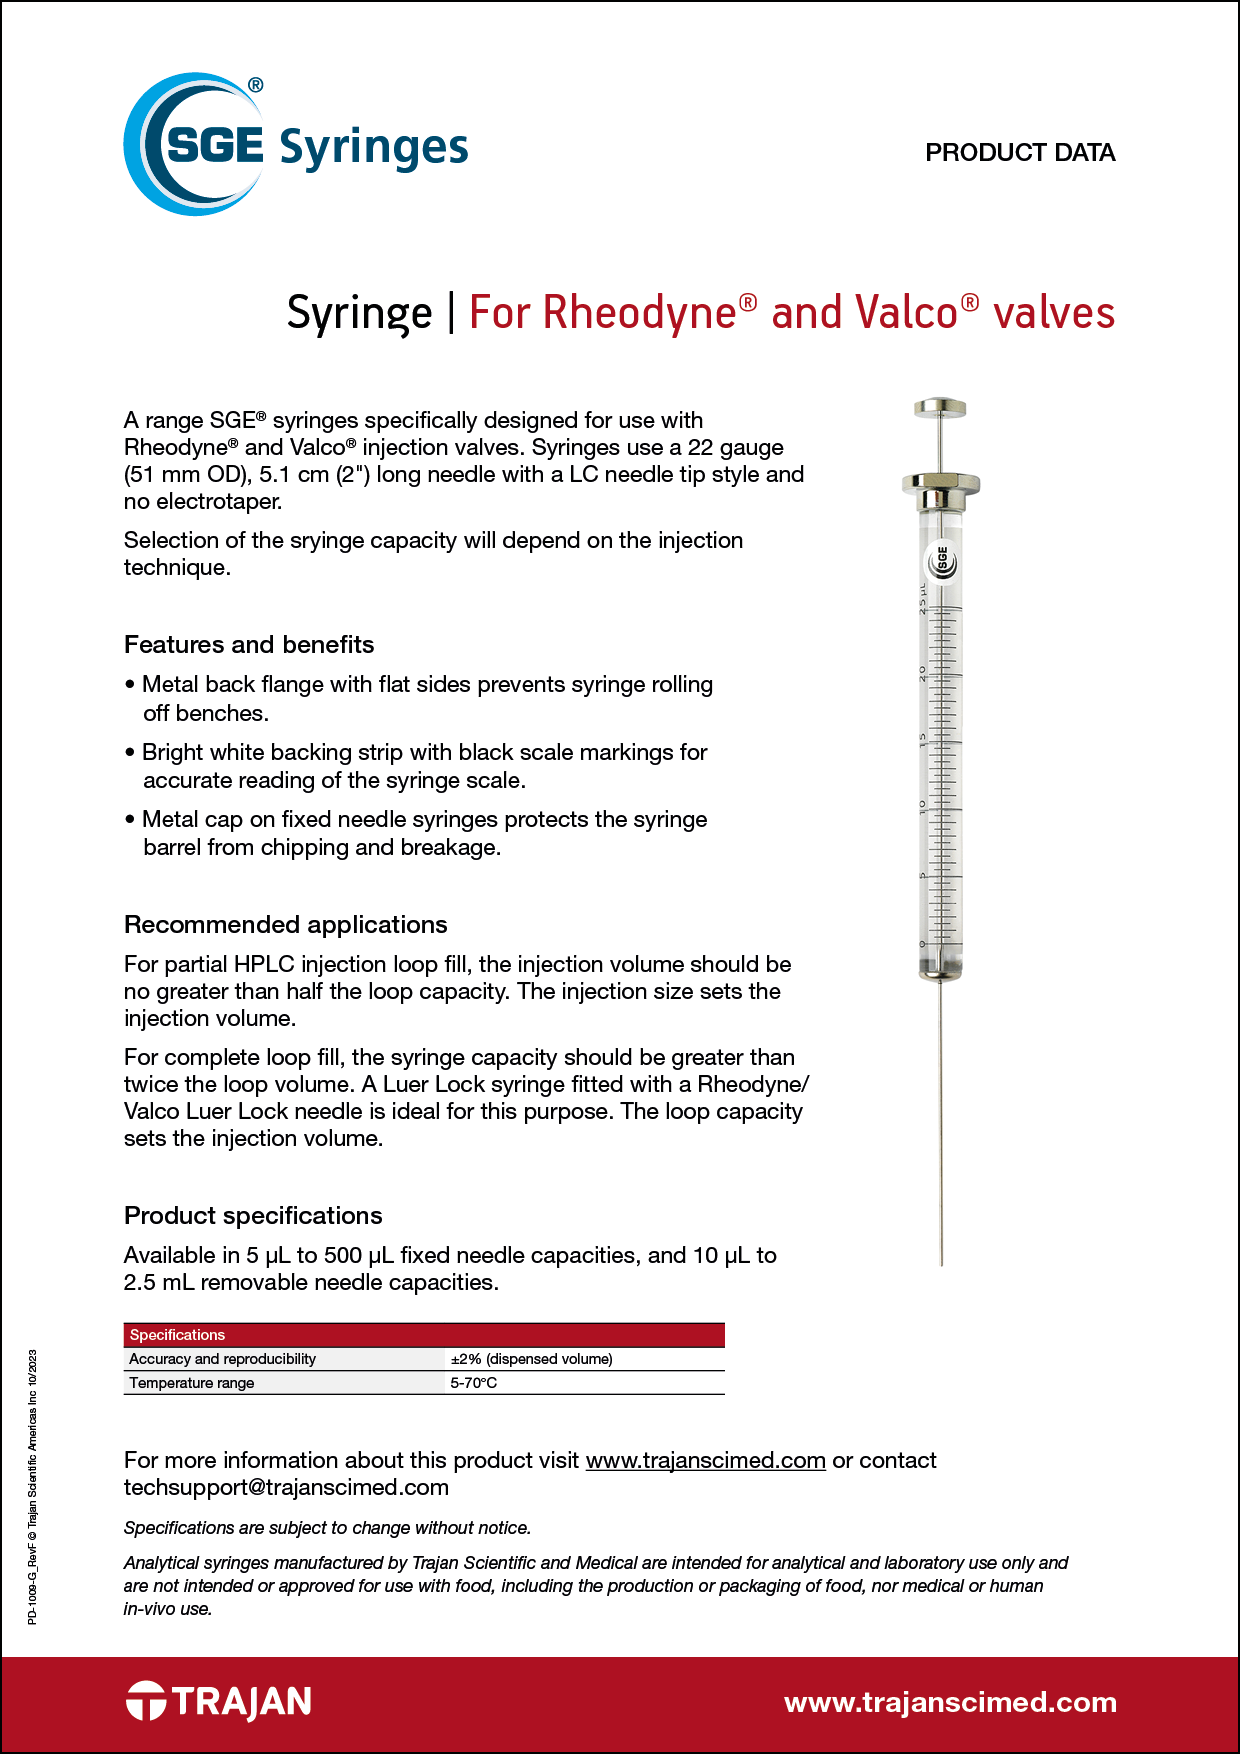 Product Data Sheet - SGE syringes for Rheodyne and Valco valves